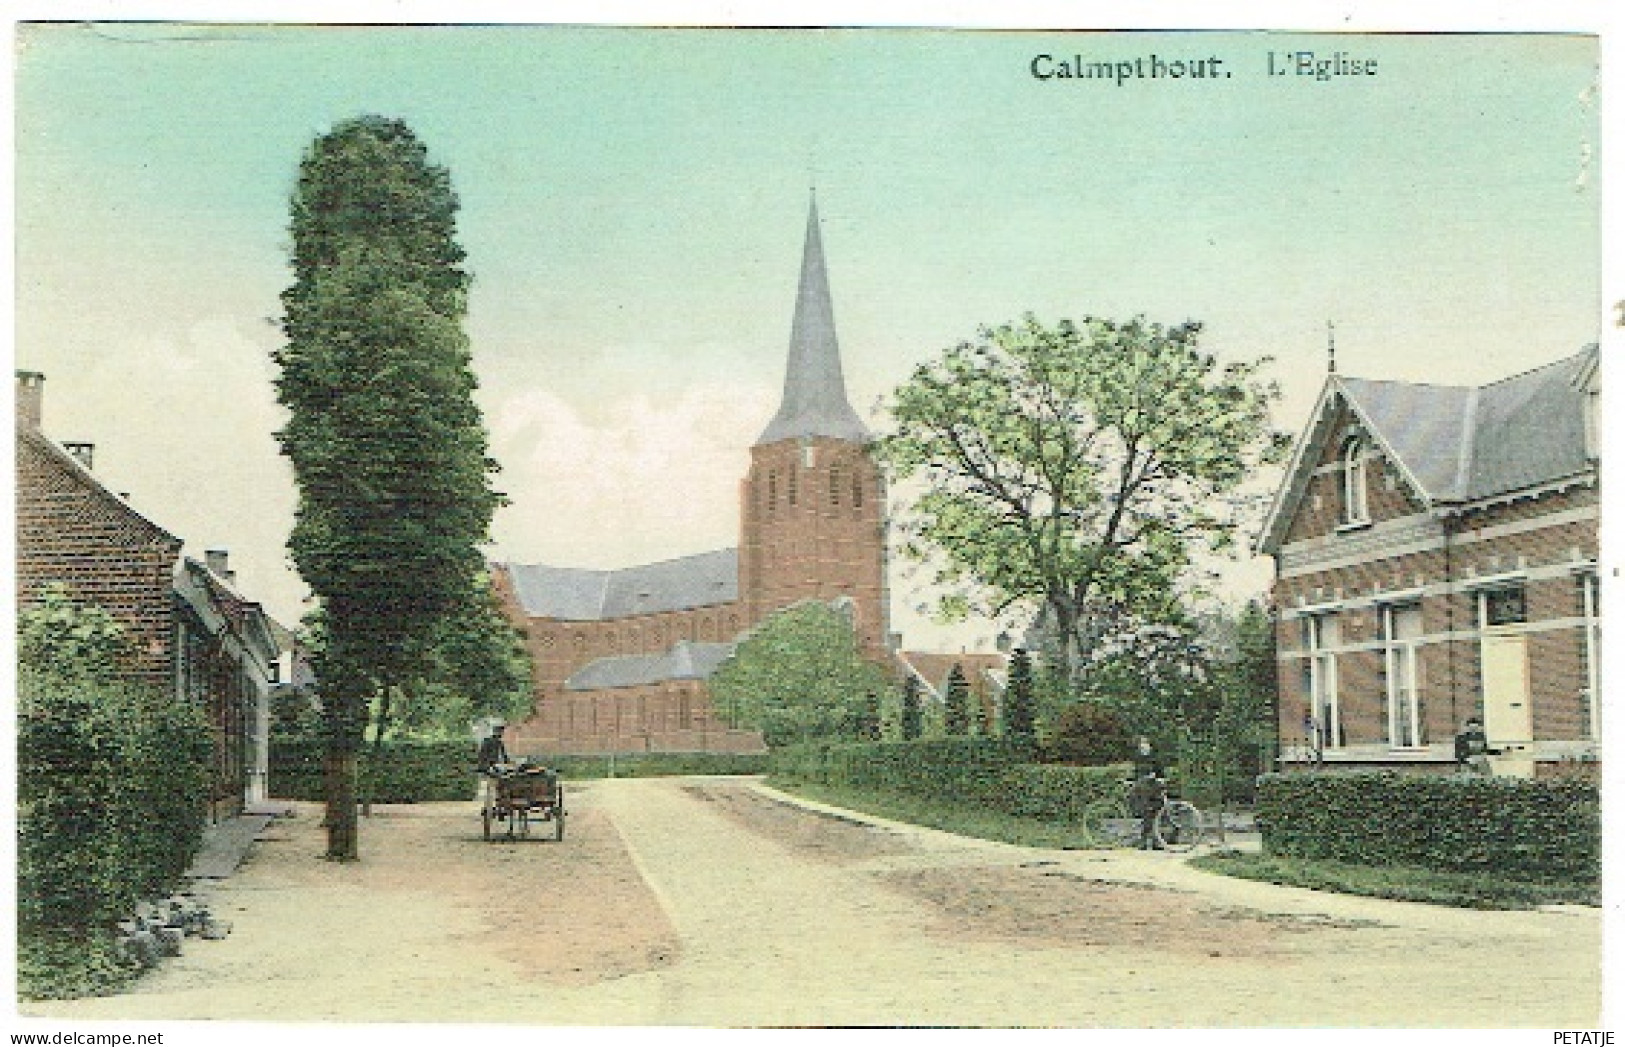 Calmpthout , L'Eglise - Kalmthout